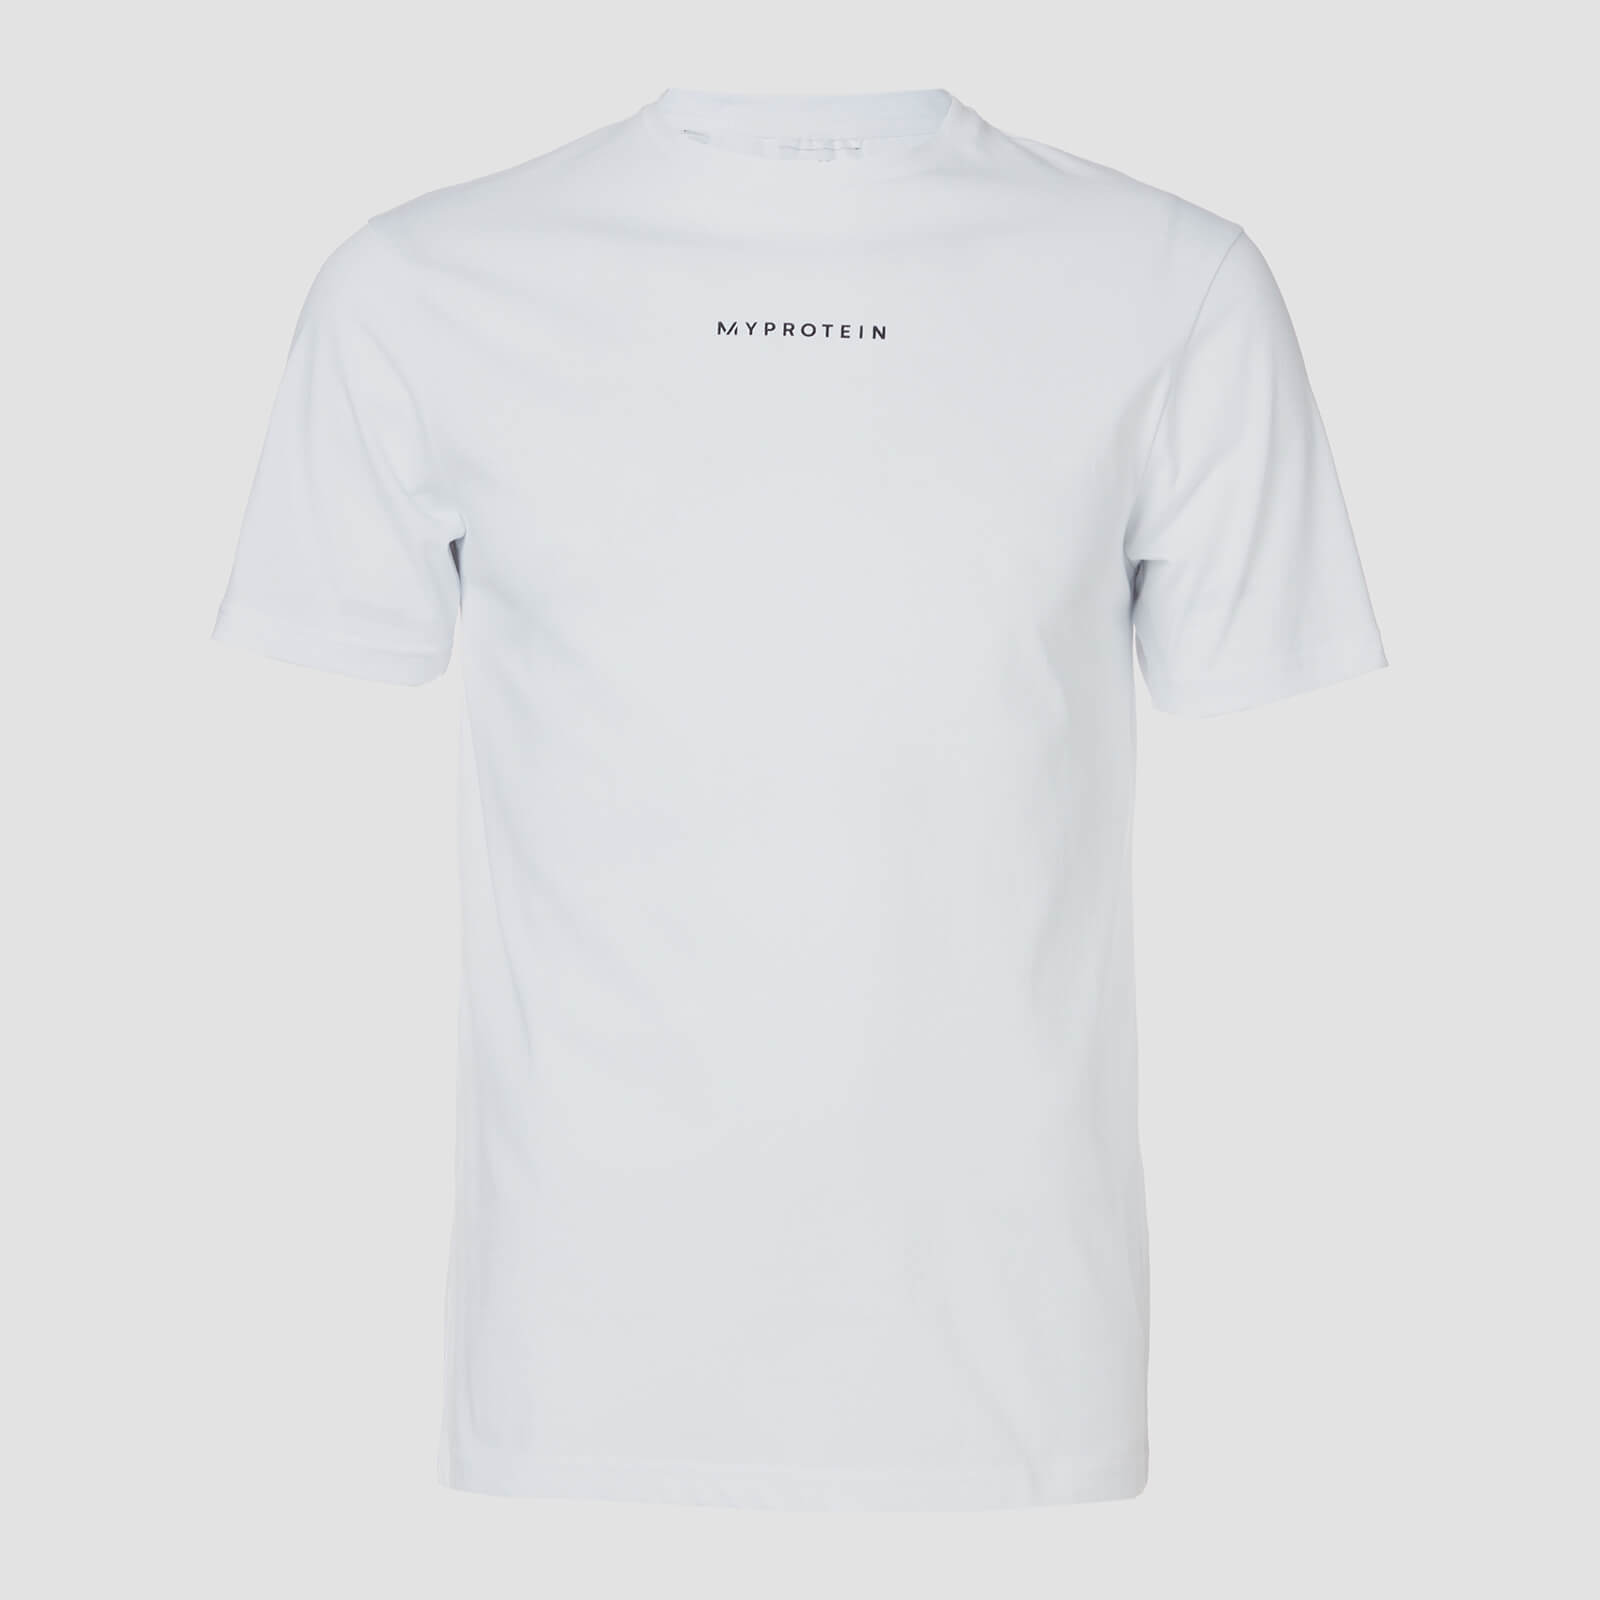 Myprotein Camiseta Original Contemporary - Blanco - S